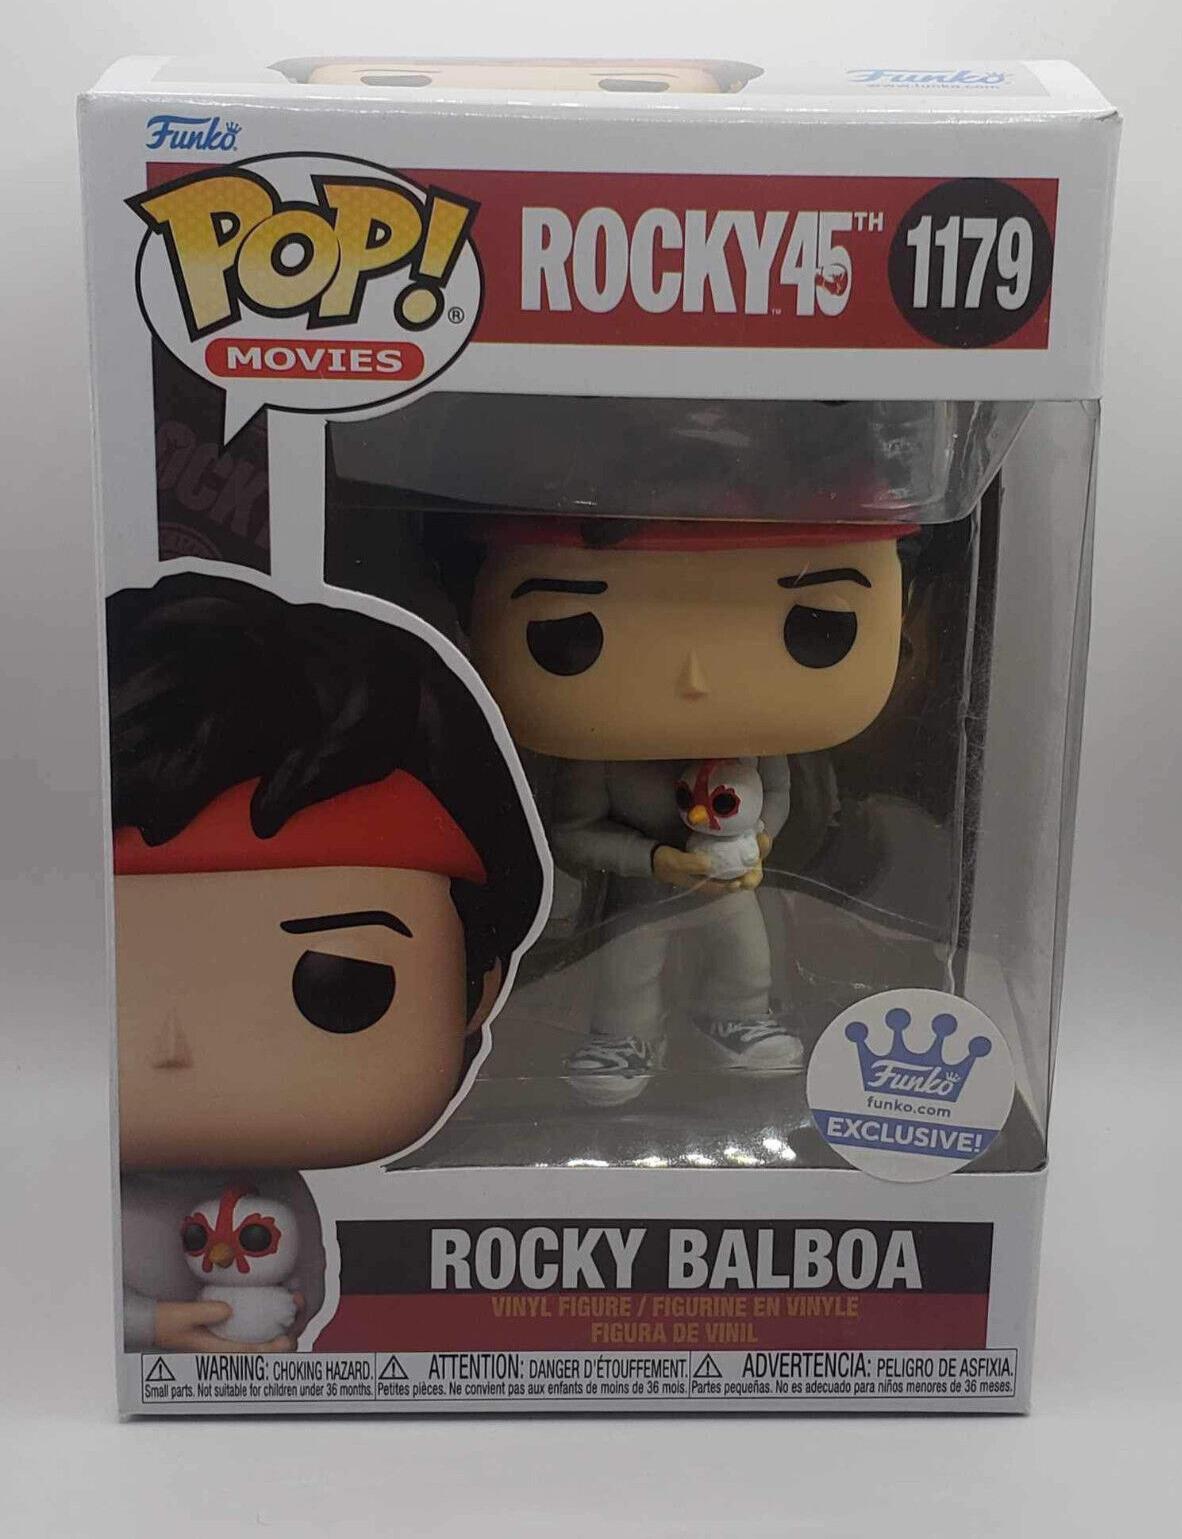 Funko Shop Movies Rocky 45th Rocky Balboa with Chicken Pop #1179